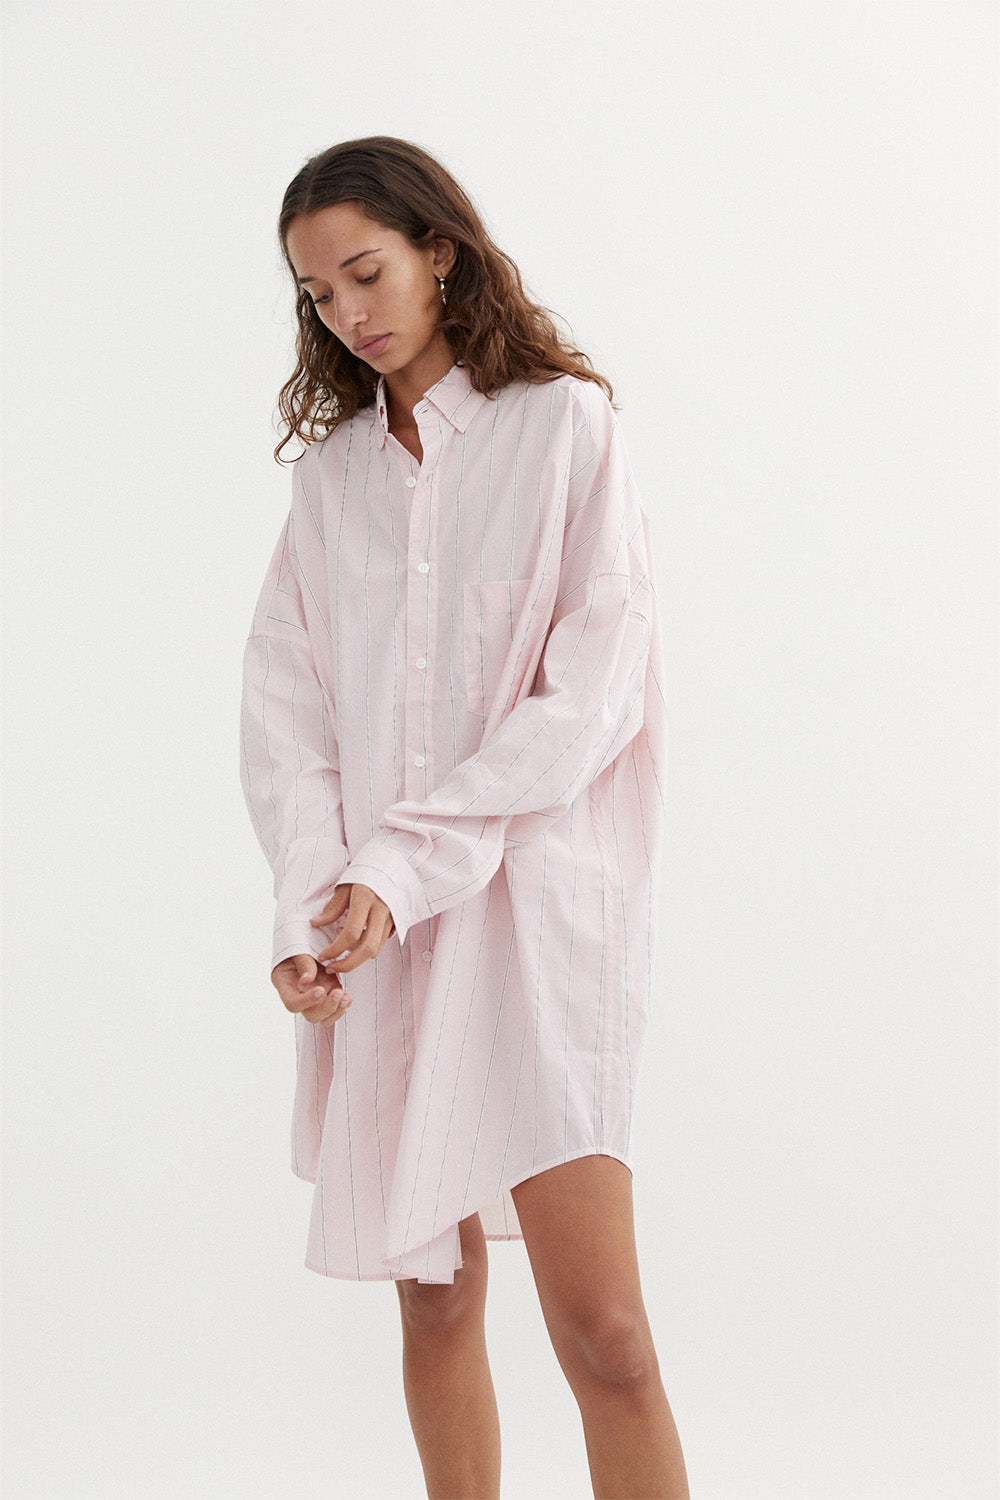 Cassian Shirt Dress in Pink by BLANCA